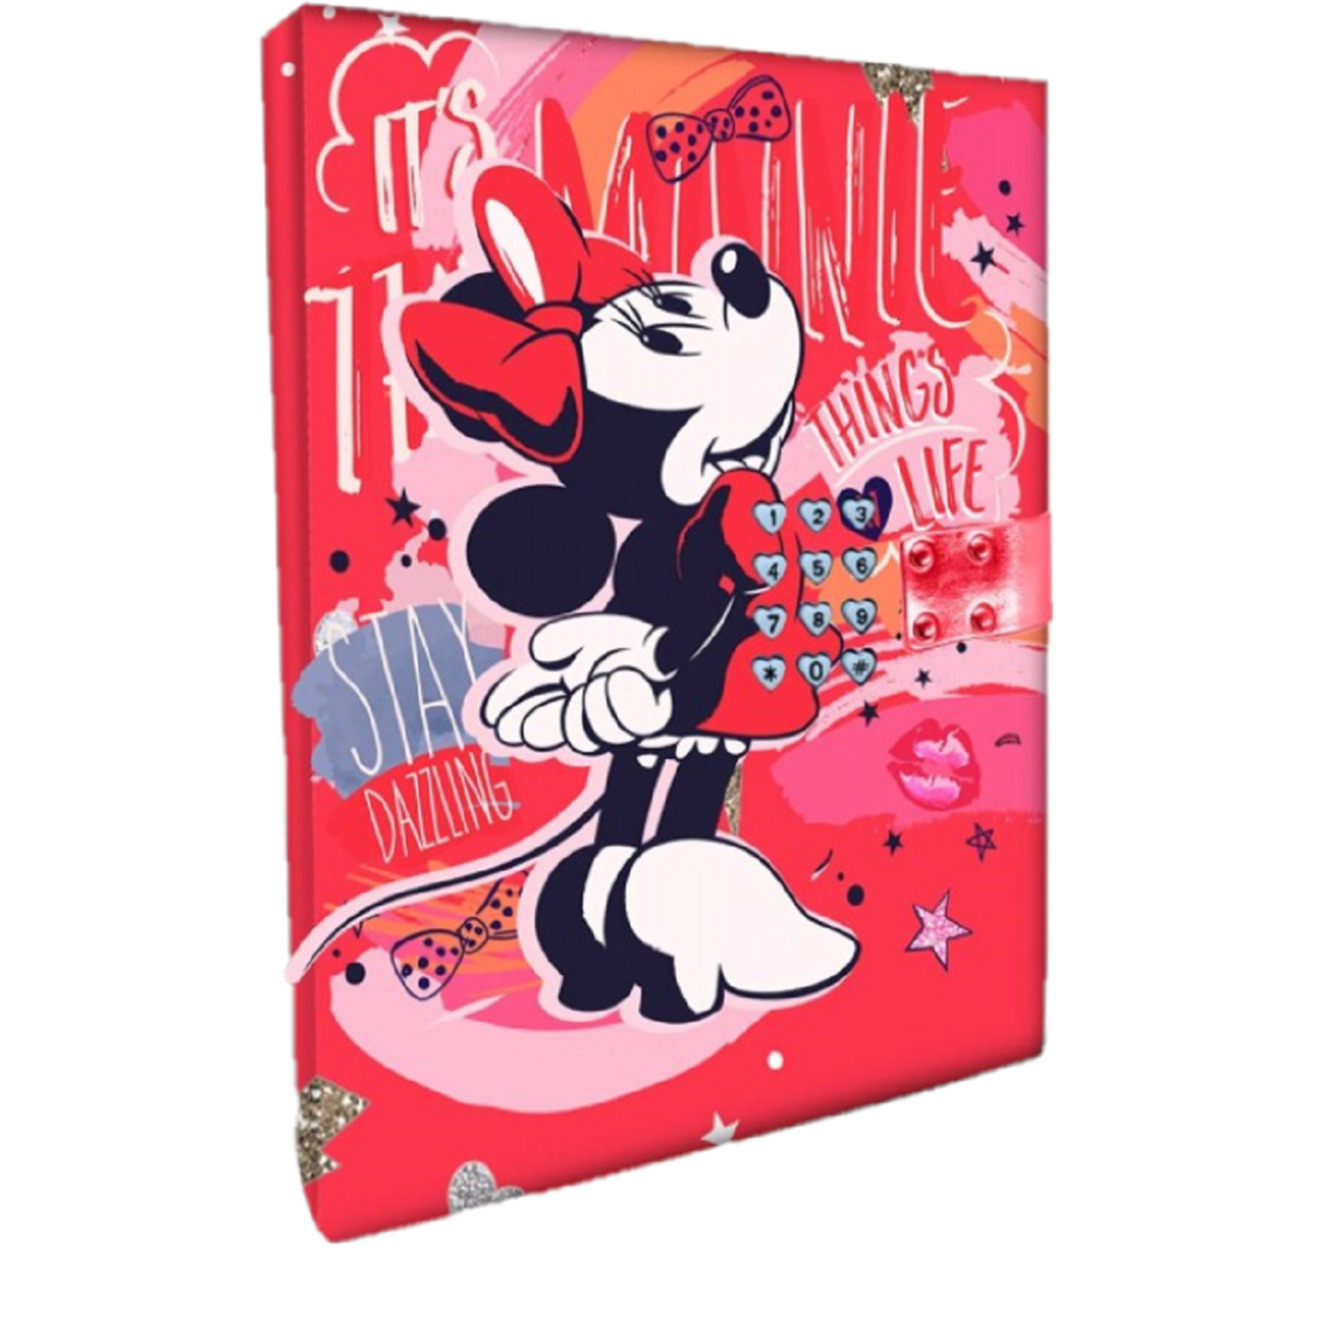 Geheim Disney Minnie Mouse dagboek met code